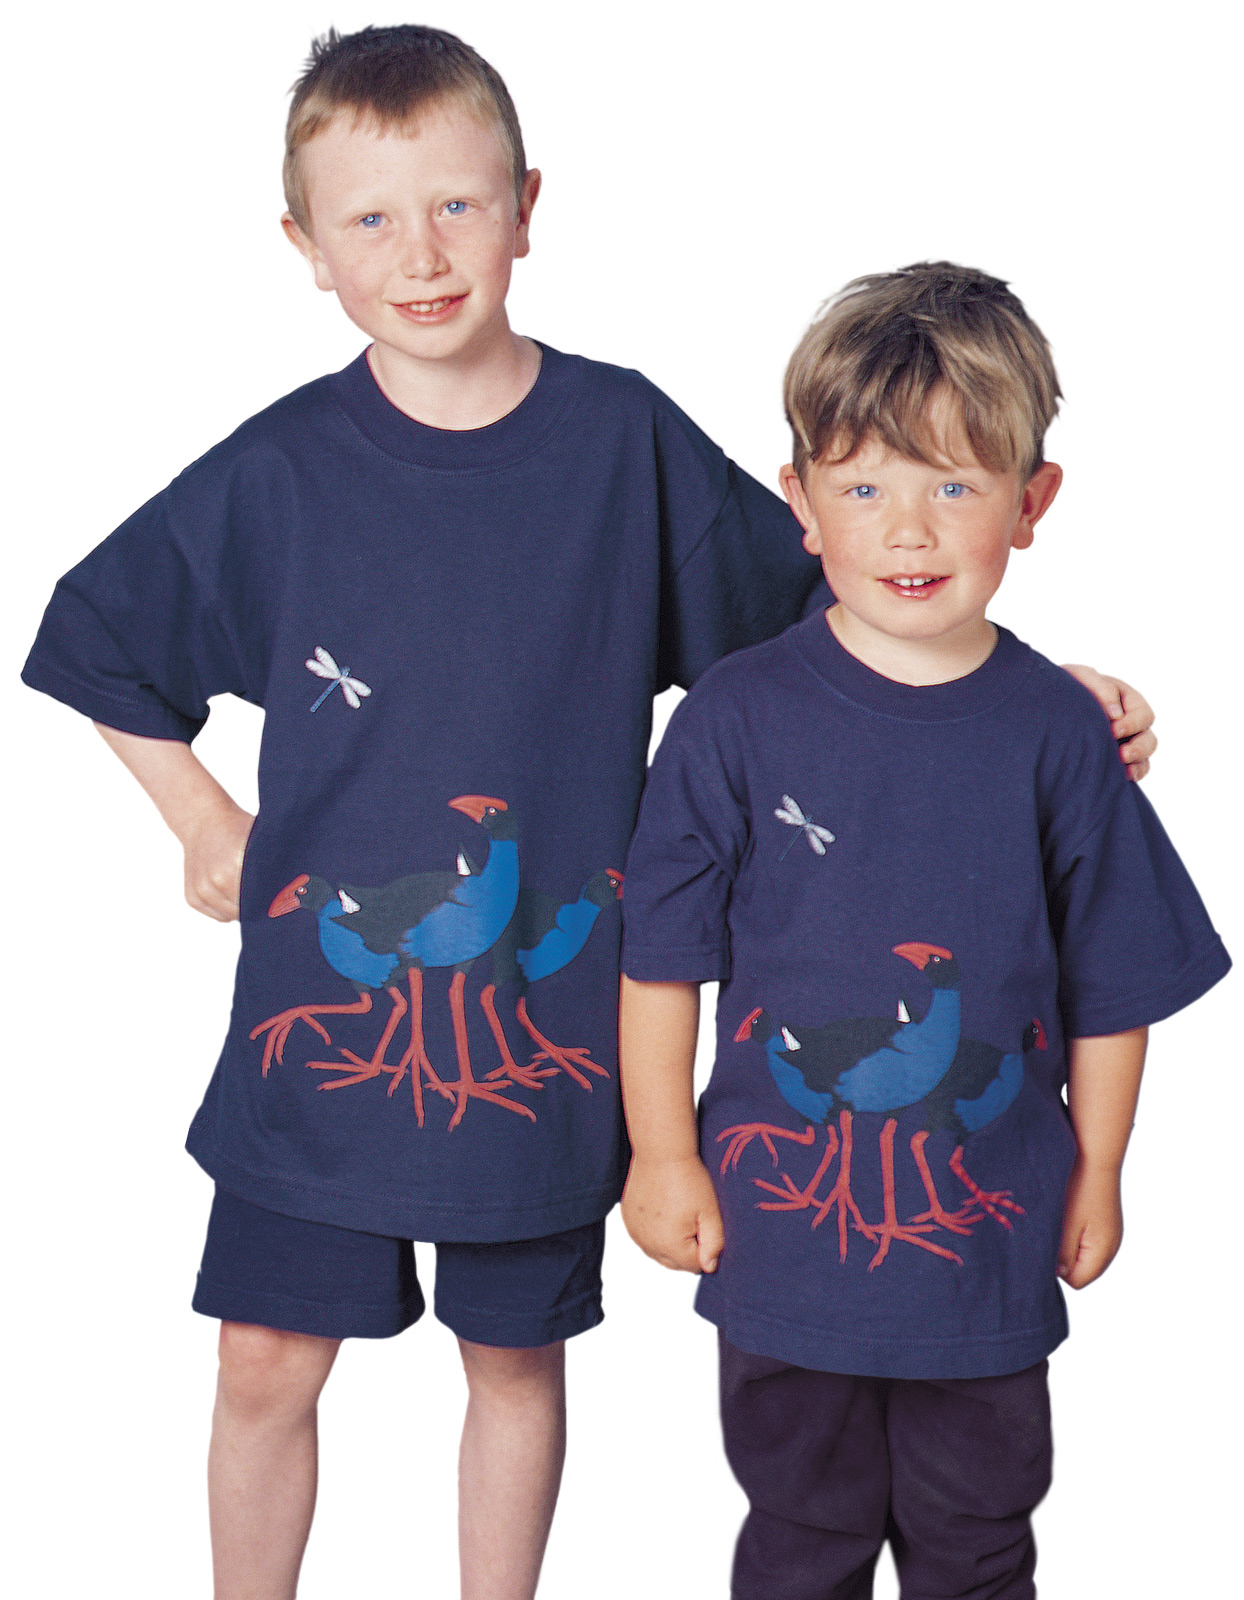 ‘Pukeko New Zealand’ four colour children’s T-shirt print on navy blue fabric.